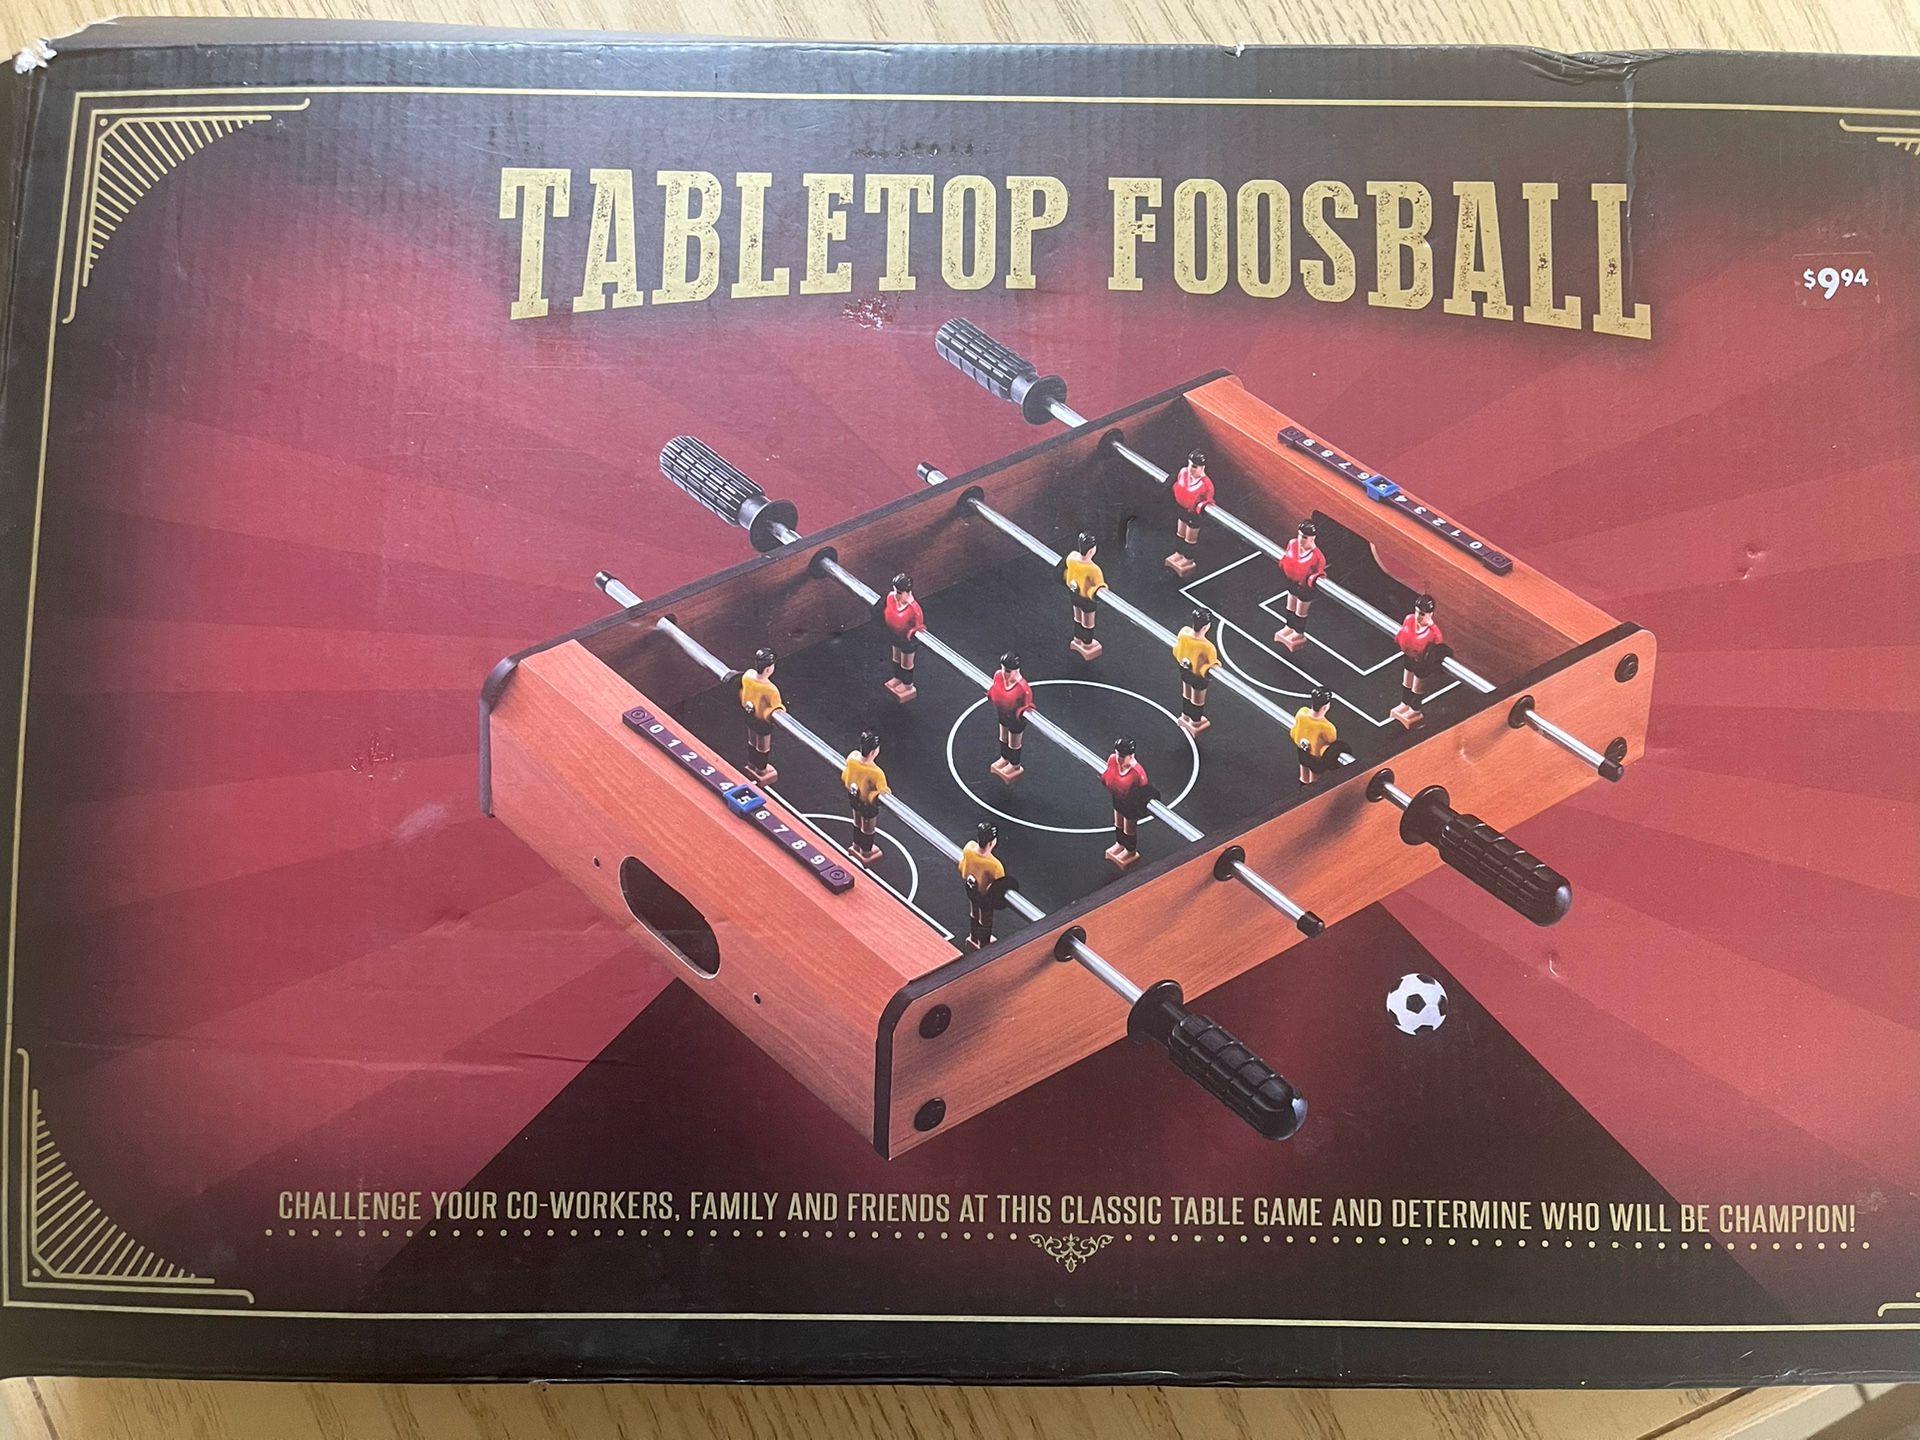 Tabletop foosball